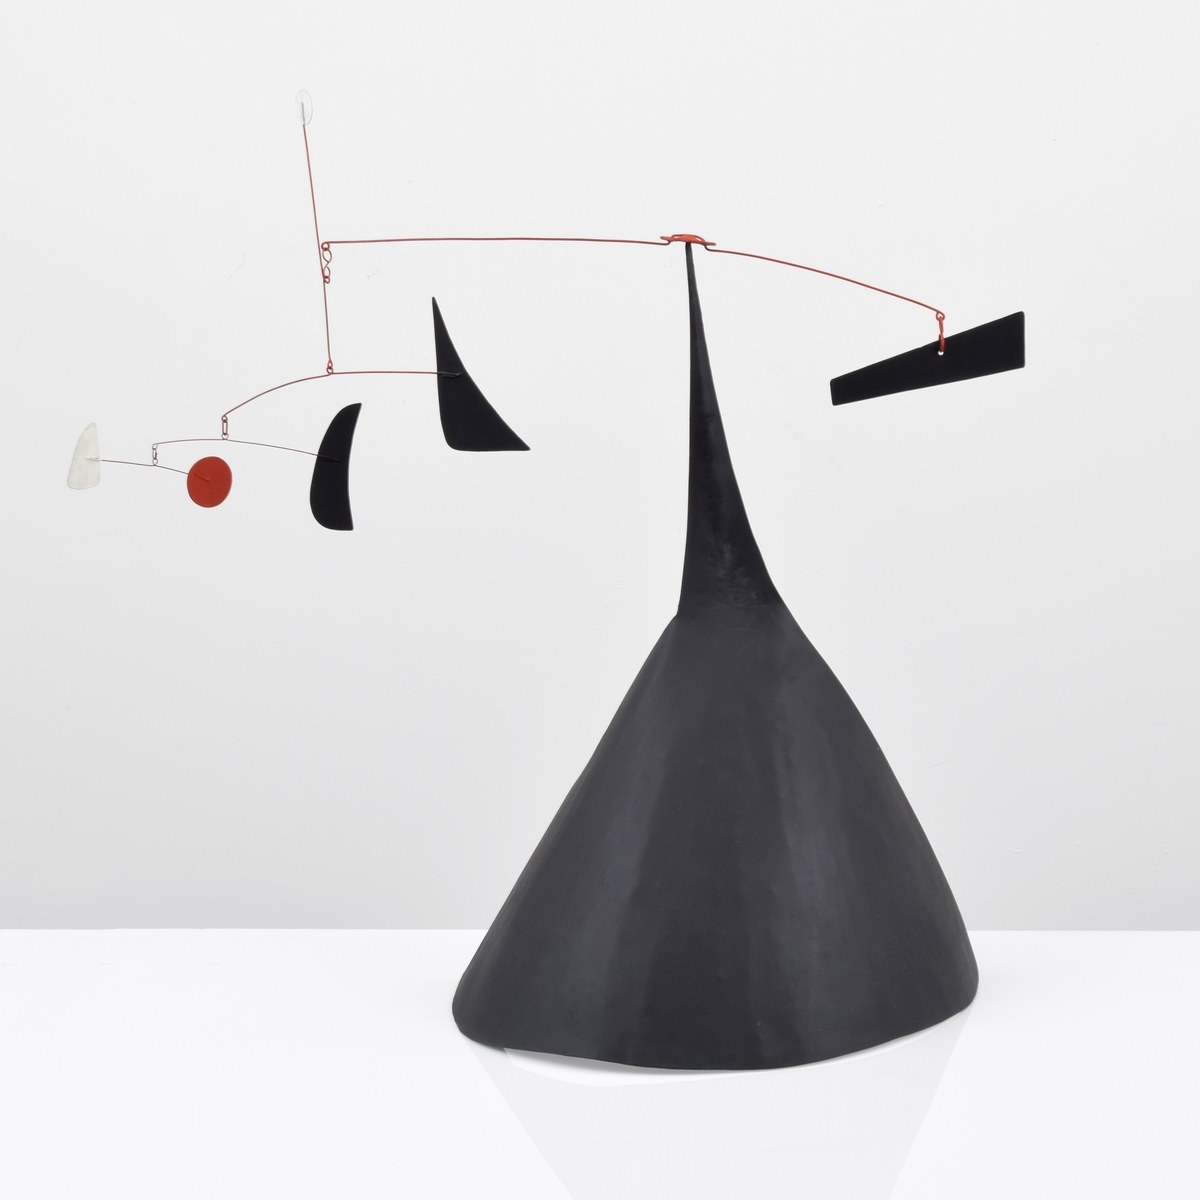 Artwork by Alexander Calder, Alexander Calder Mobile Sculpture, Made of painted sheet metal, wire